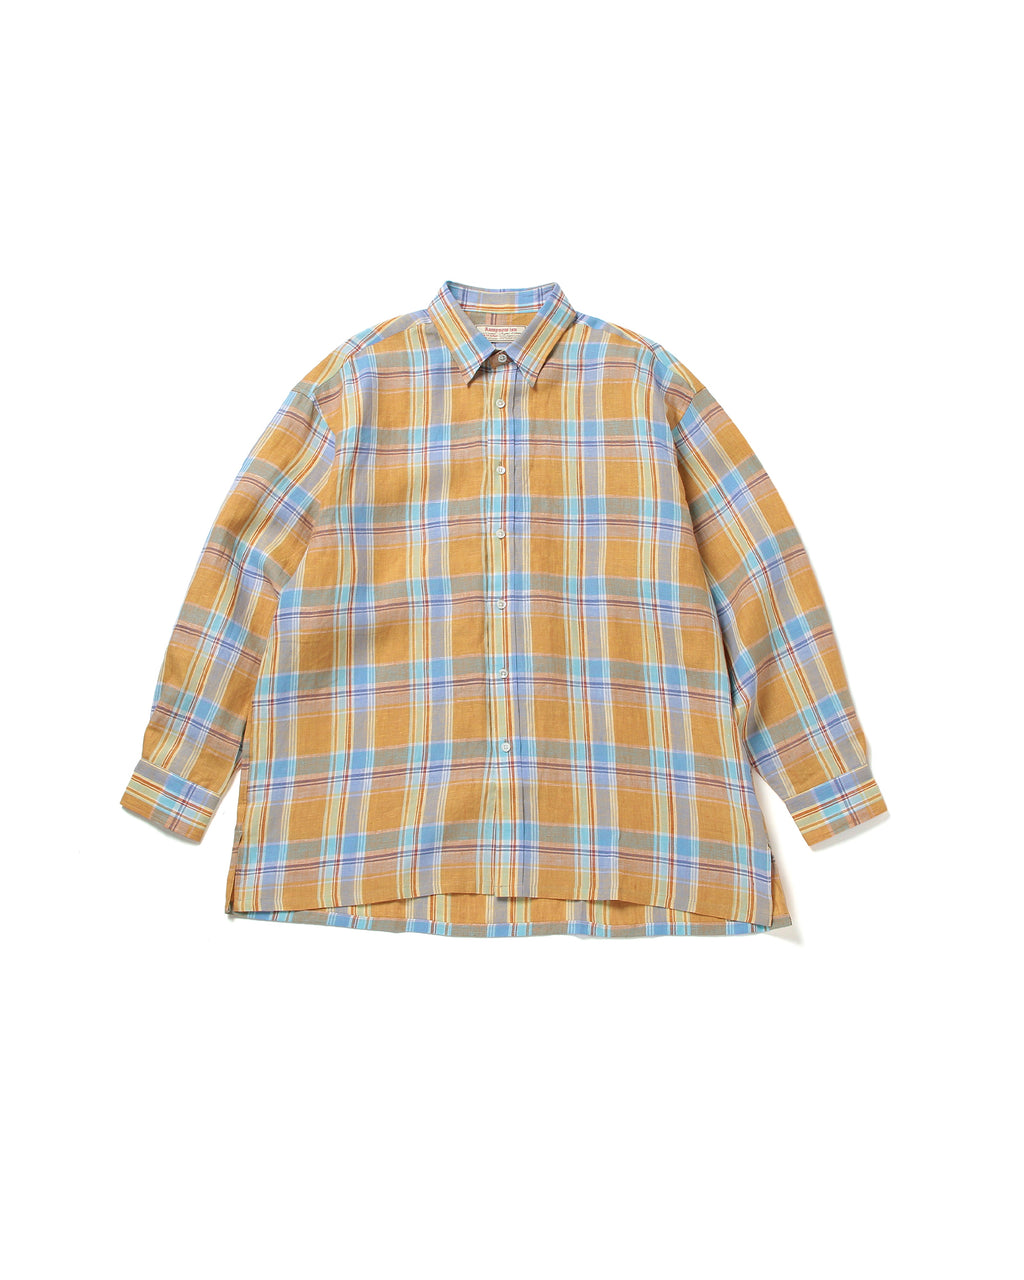 Marni Yellow Check Shirt